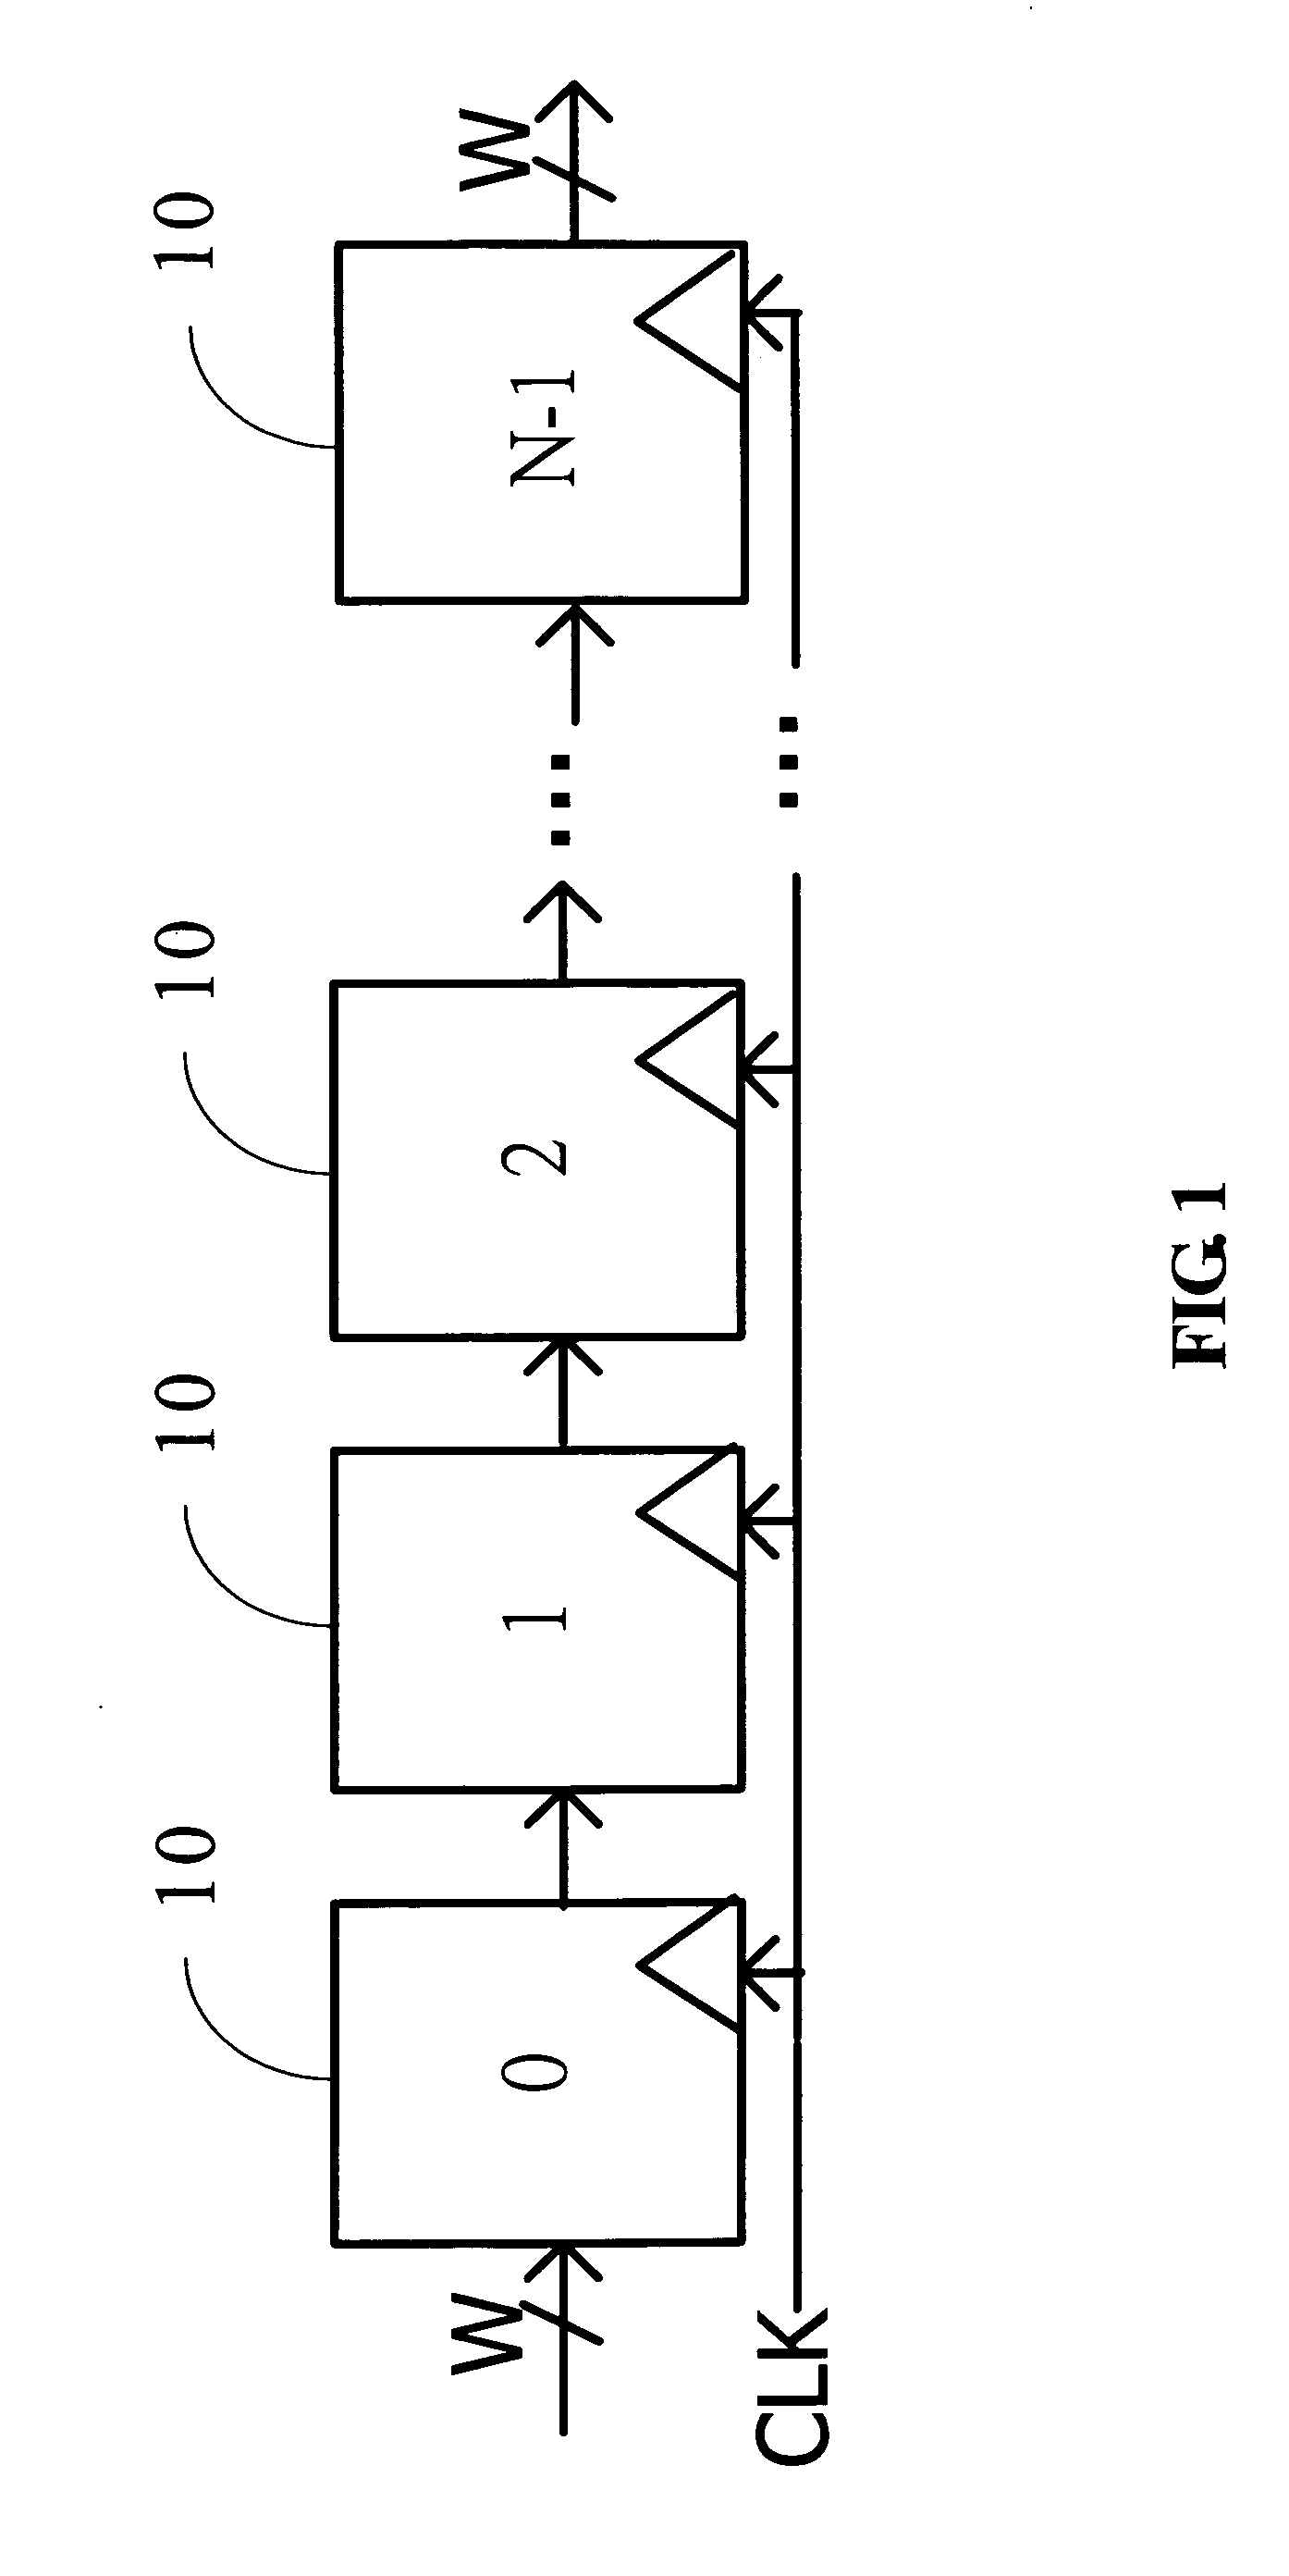 Low-power delay buffer circuit